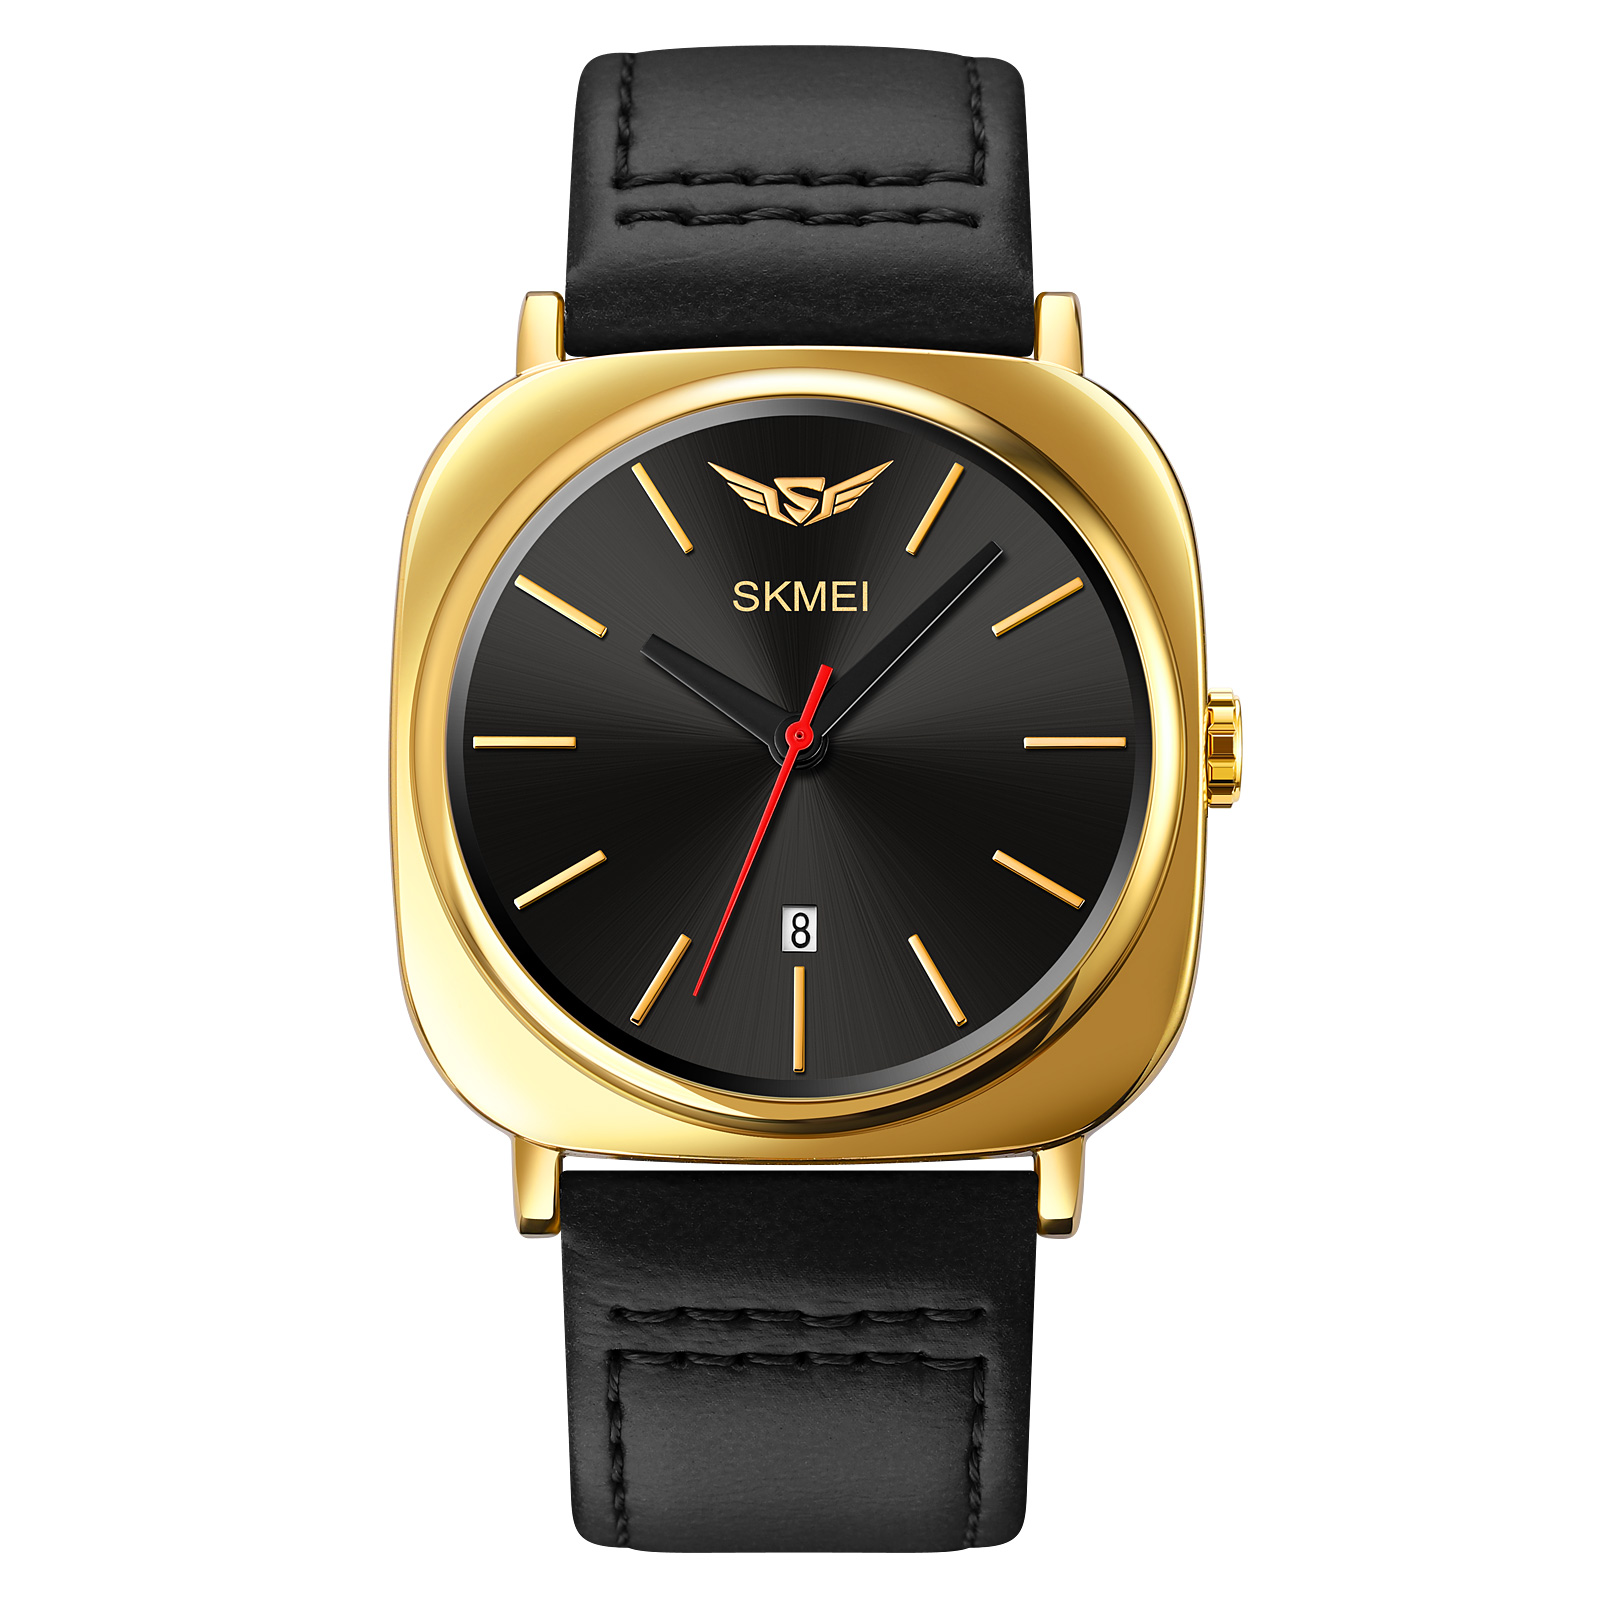 wrist watch suppliers-Skmei Watch Manufacture Co.,Ltd